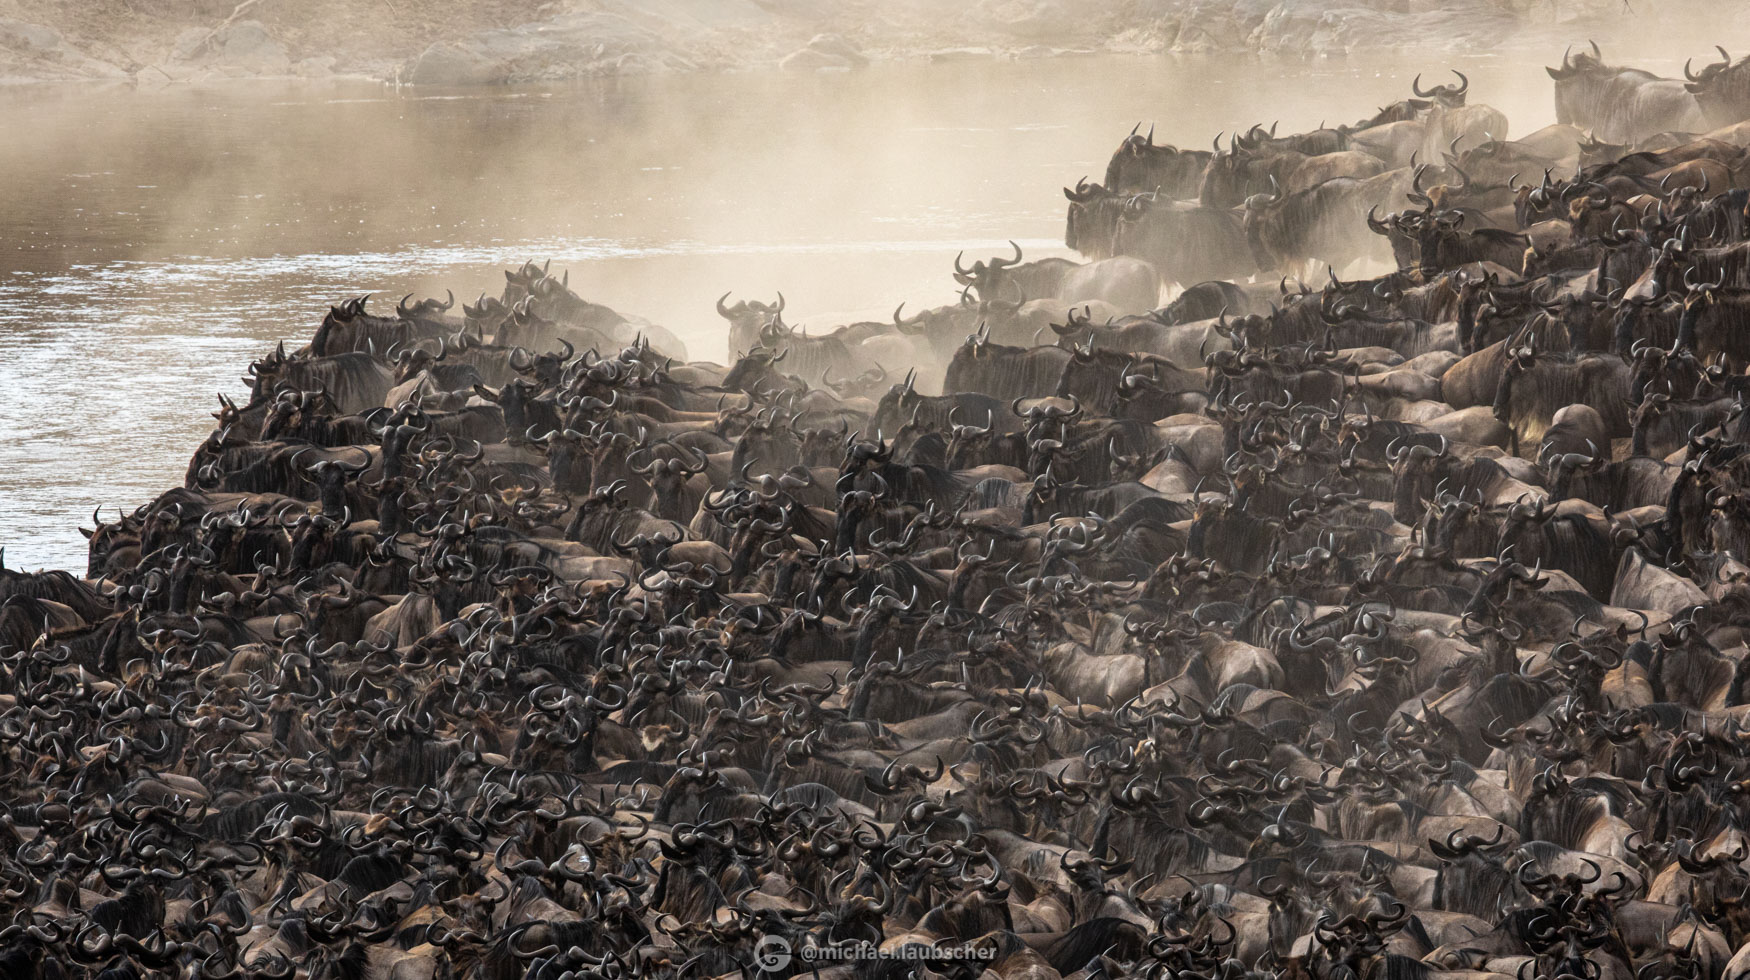 The Mara Triangle Wildebeest mass at Mara River